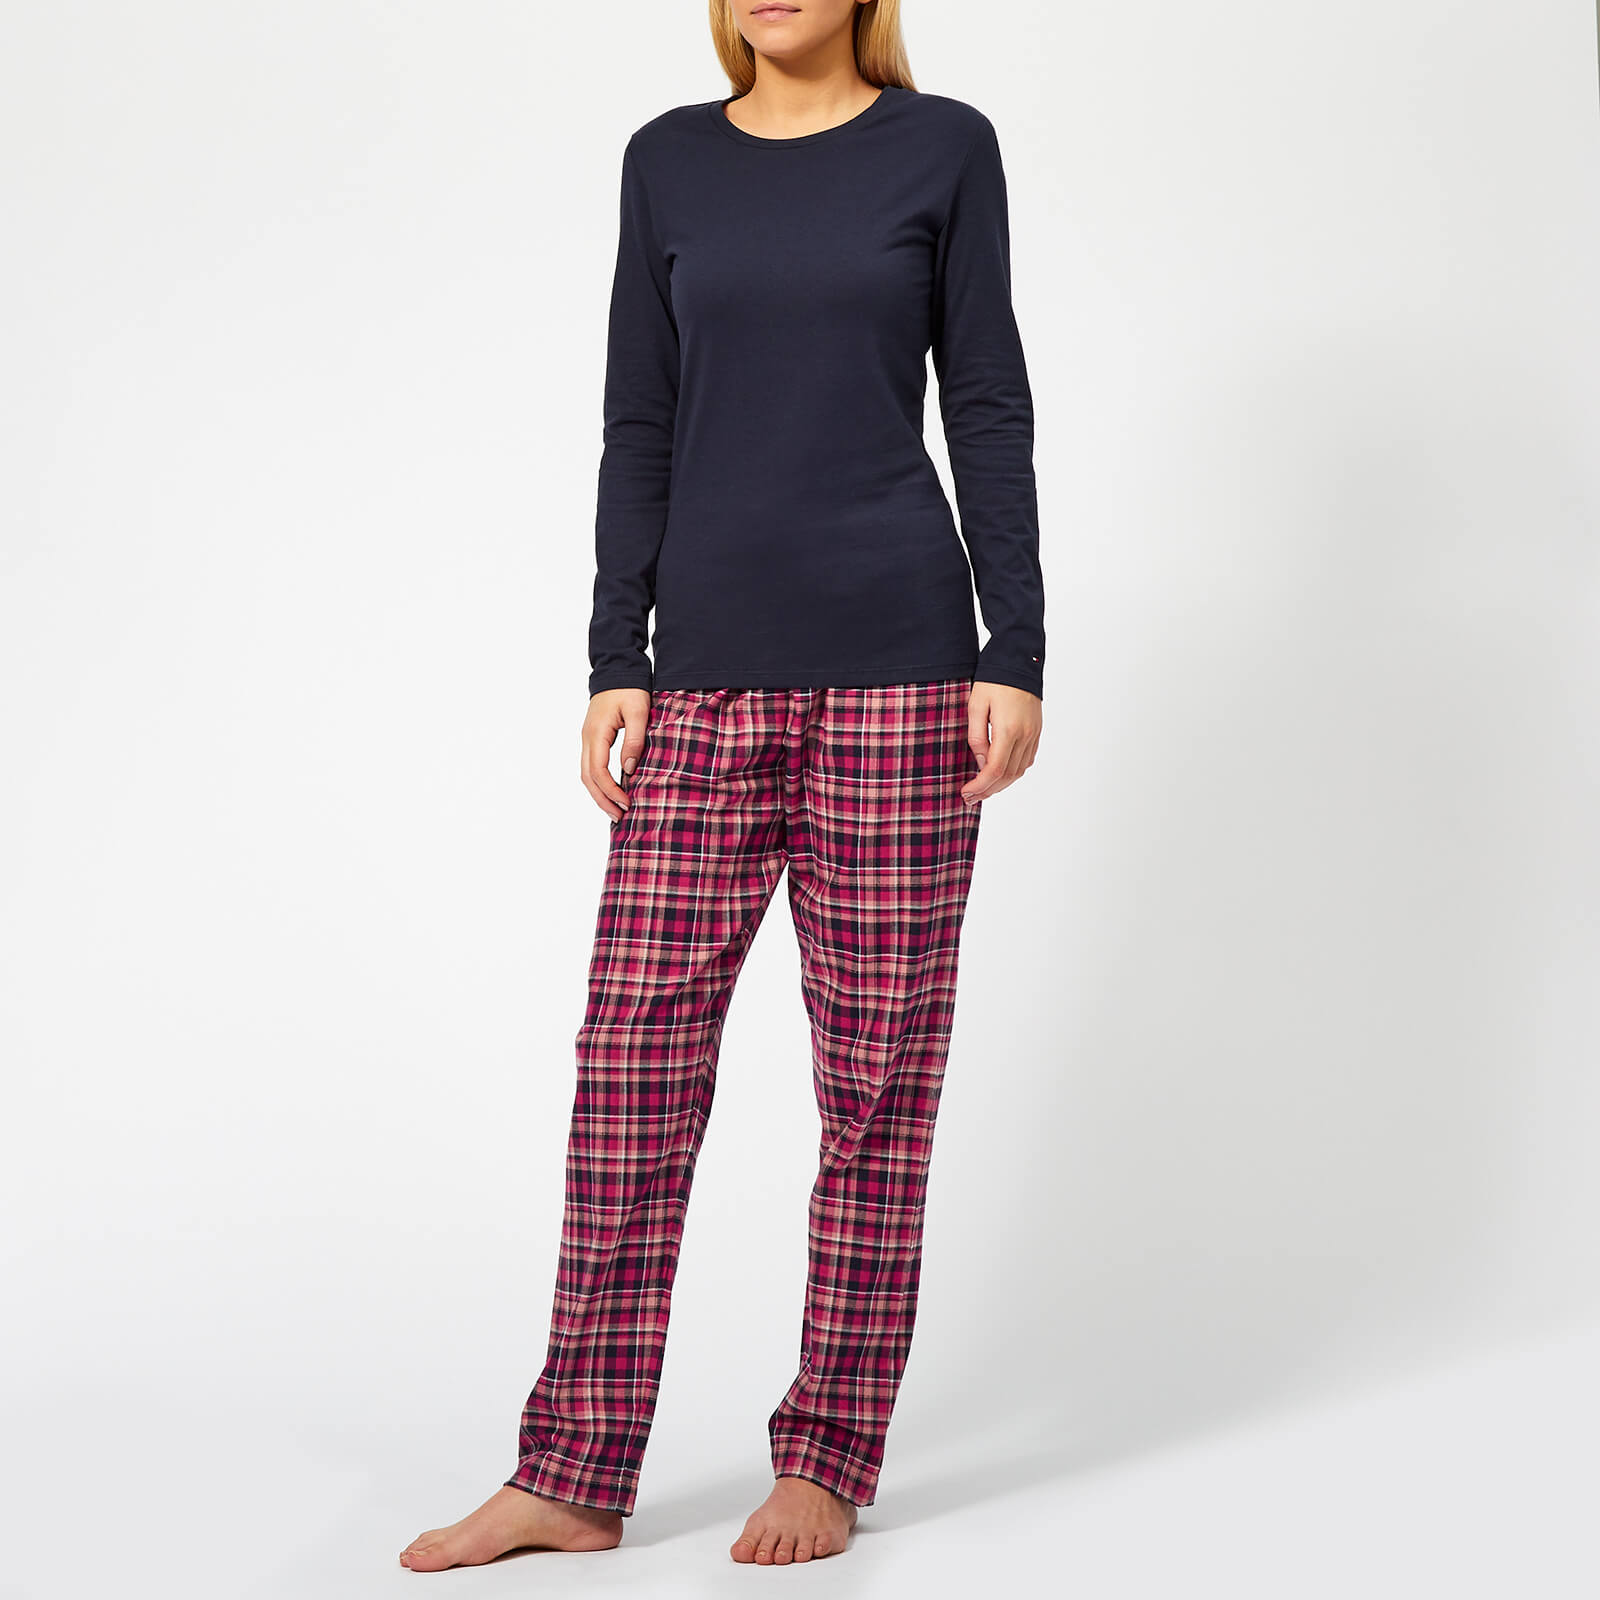 tommy hilfiger women's pajamas set